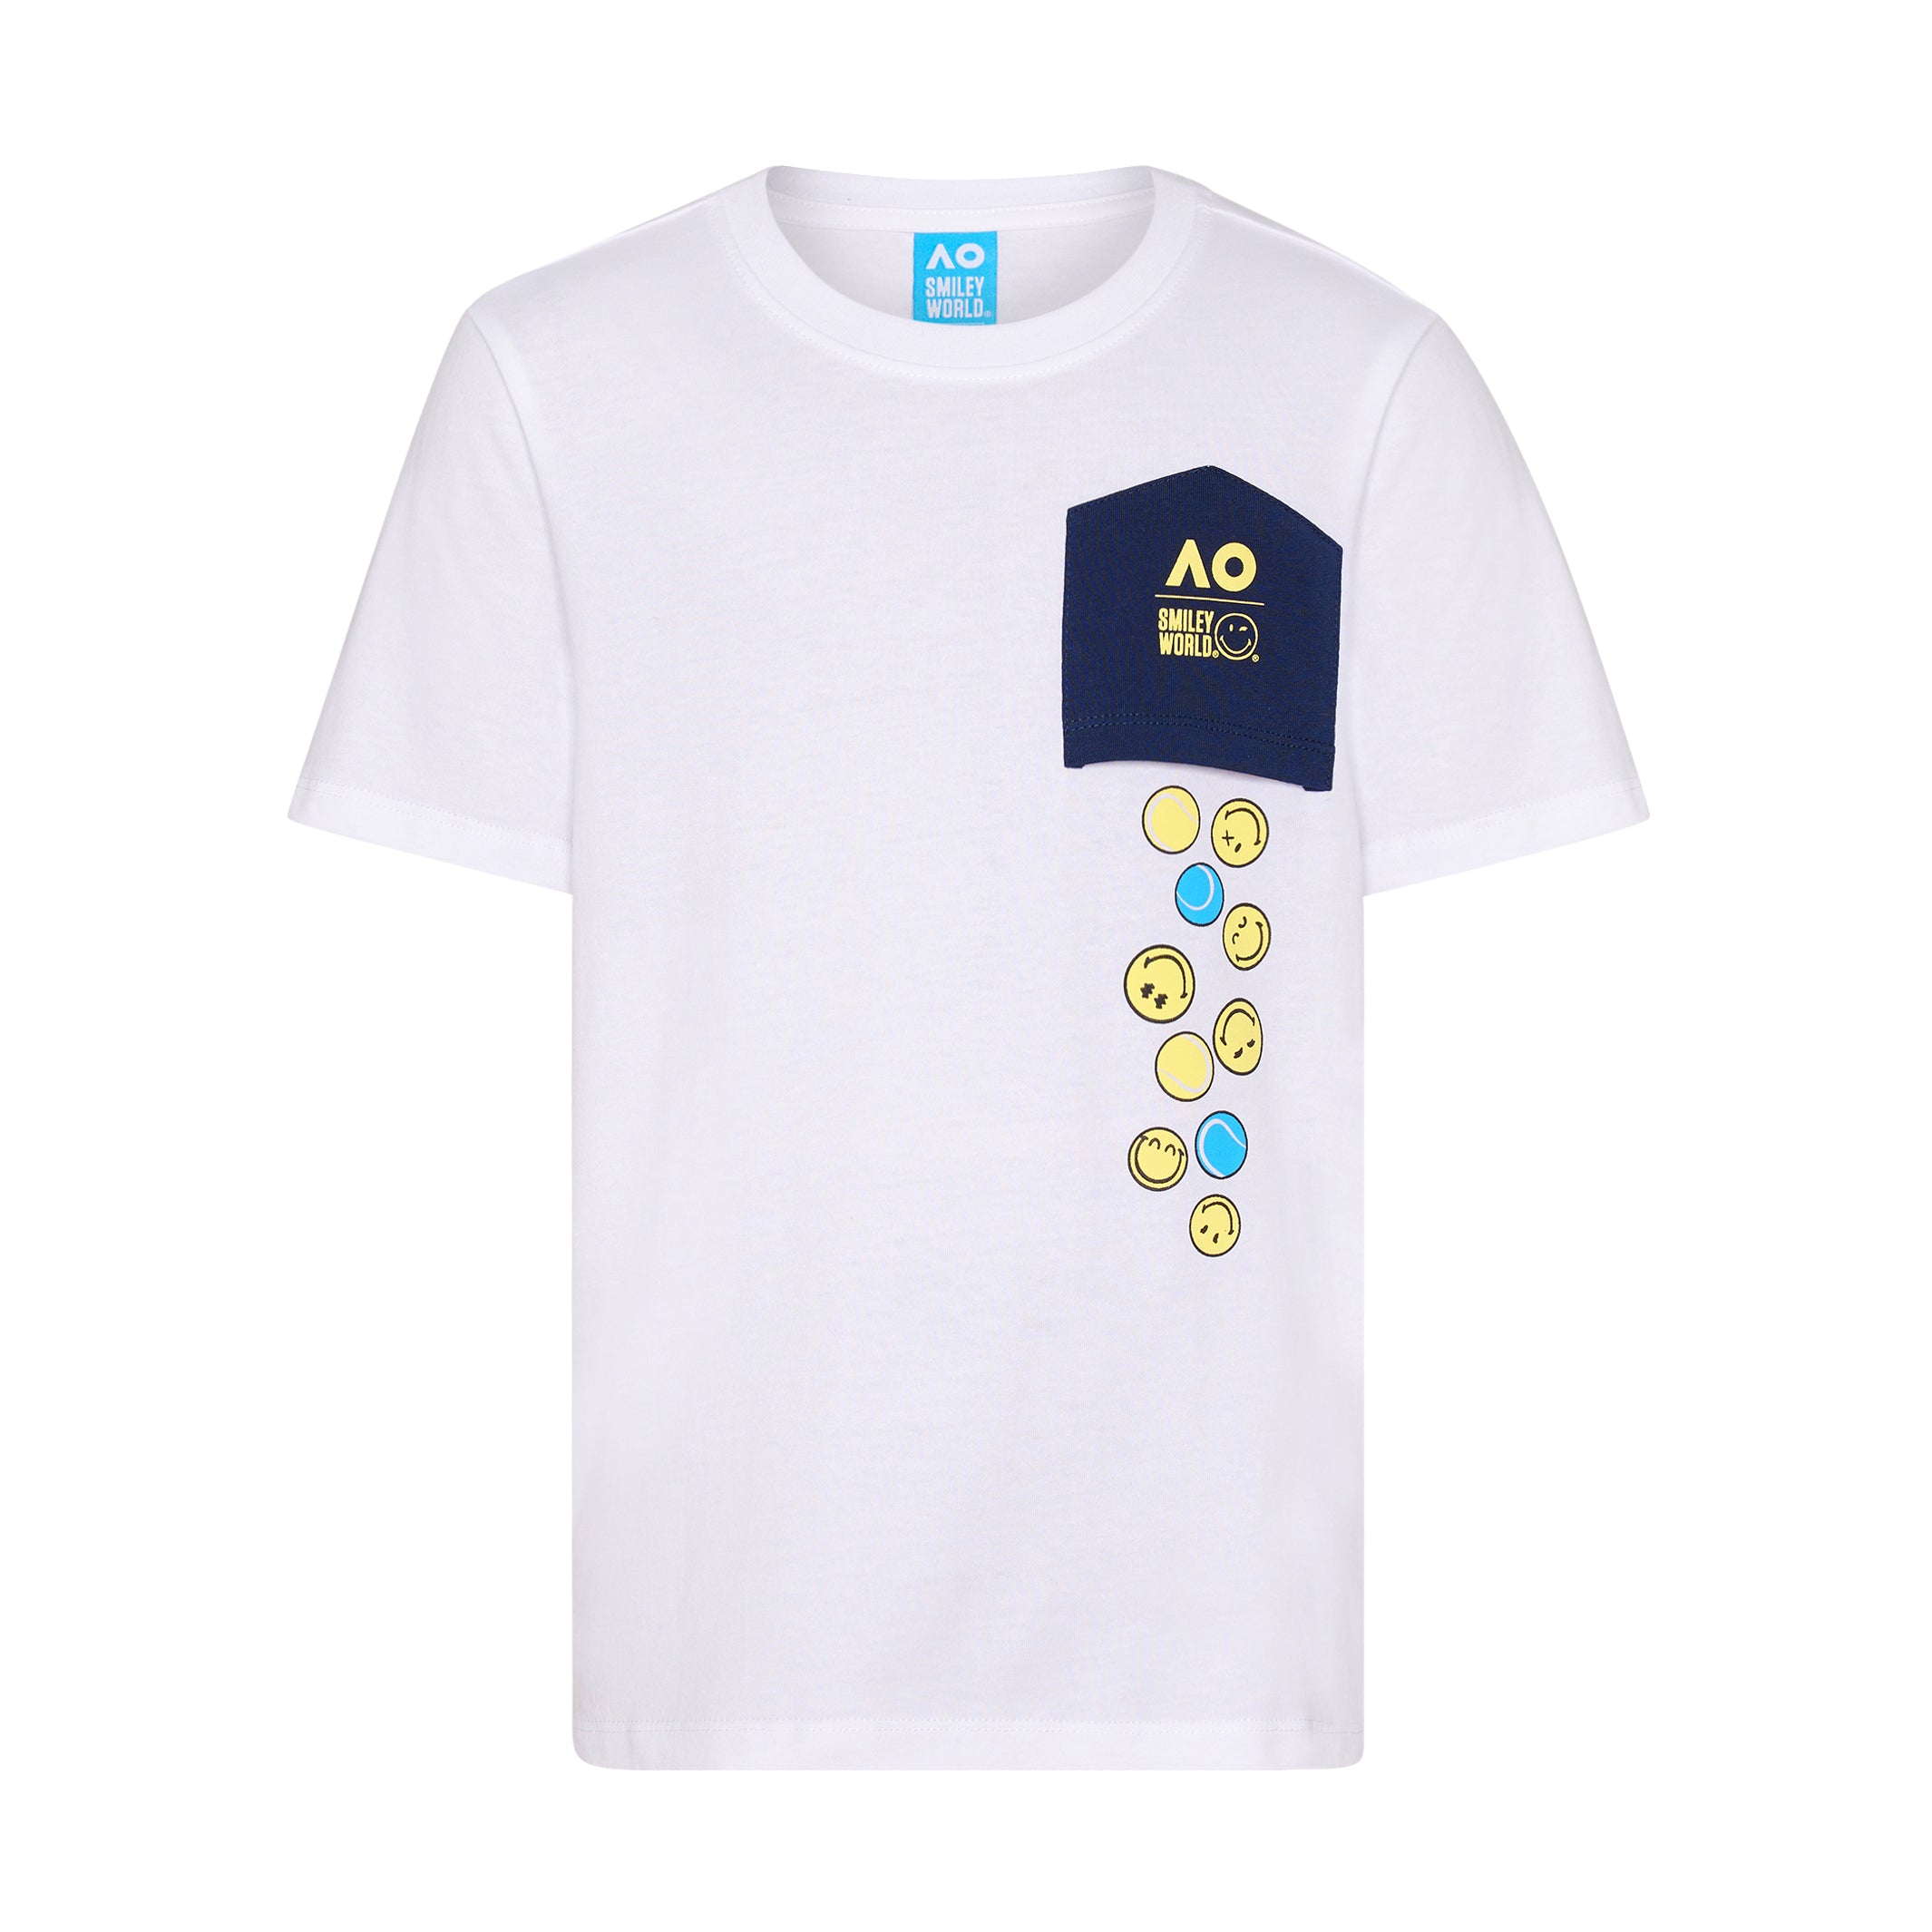 Boy's White T-Shirt SmileyWorld Pocket Front View